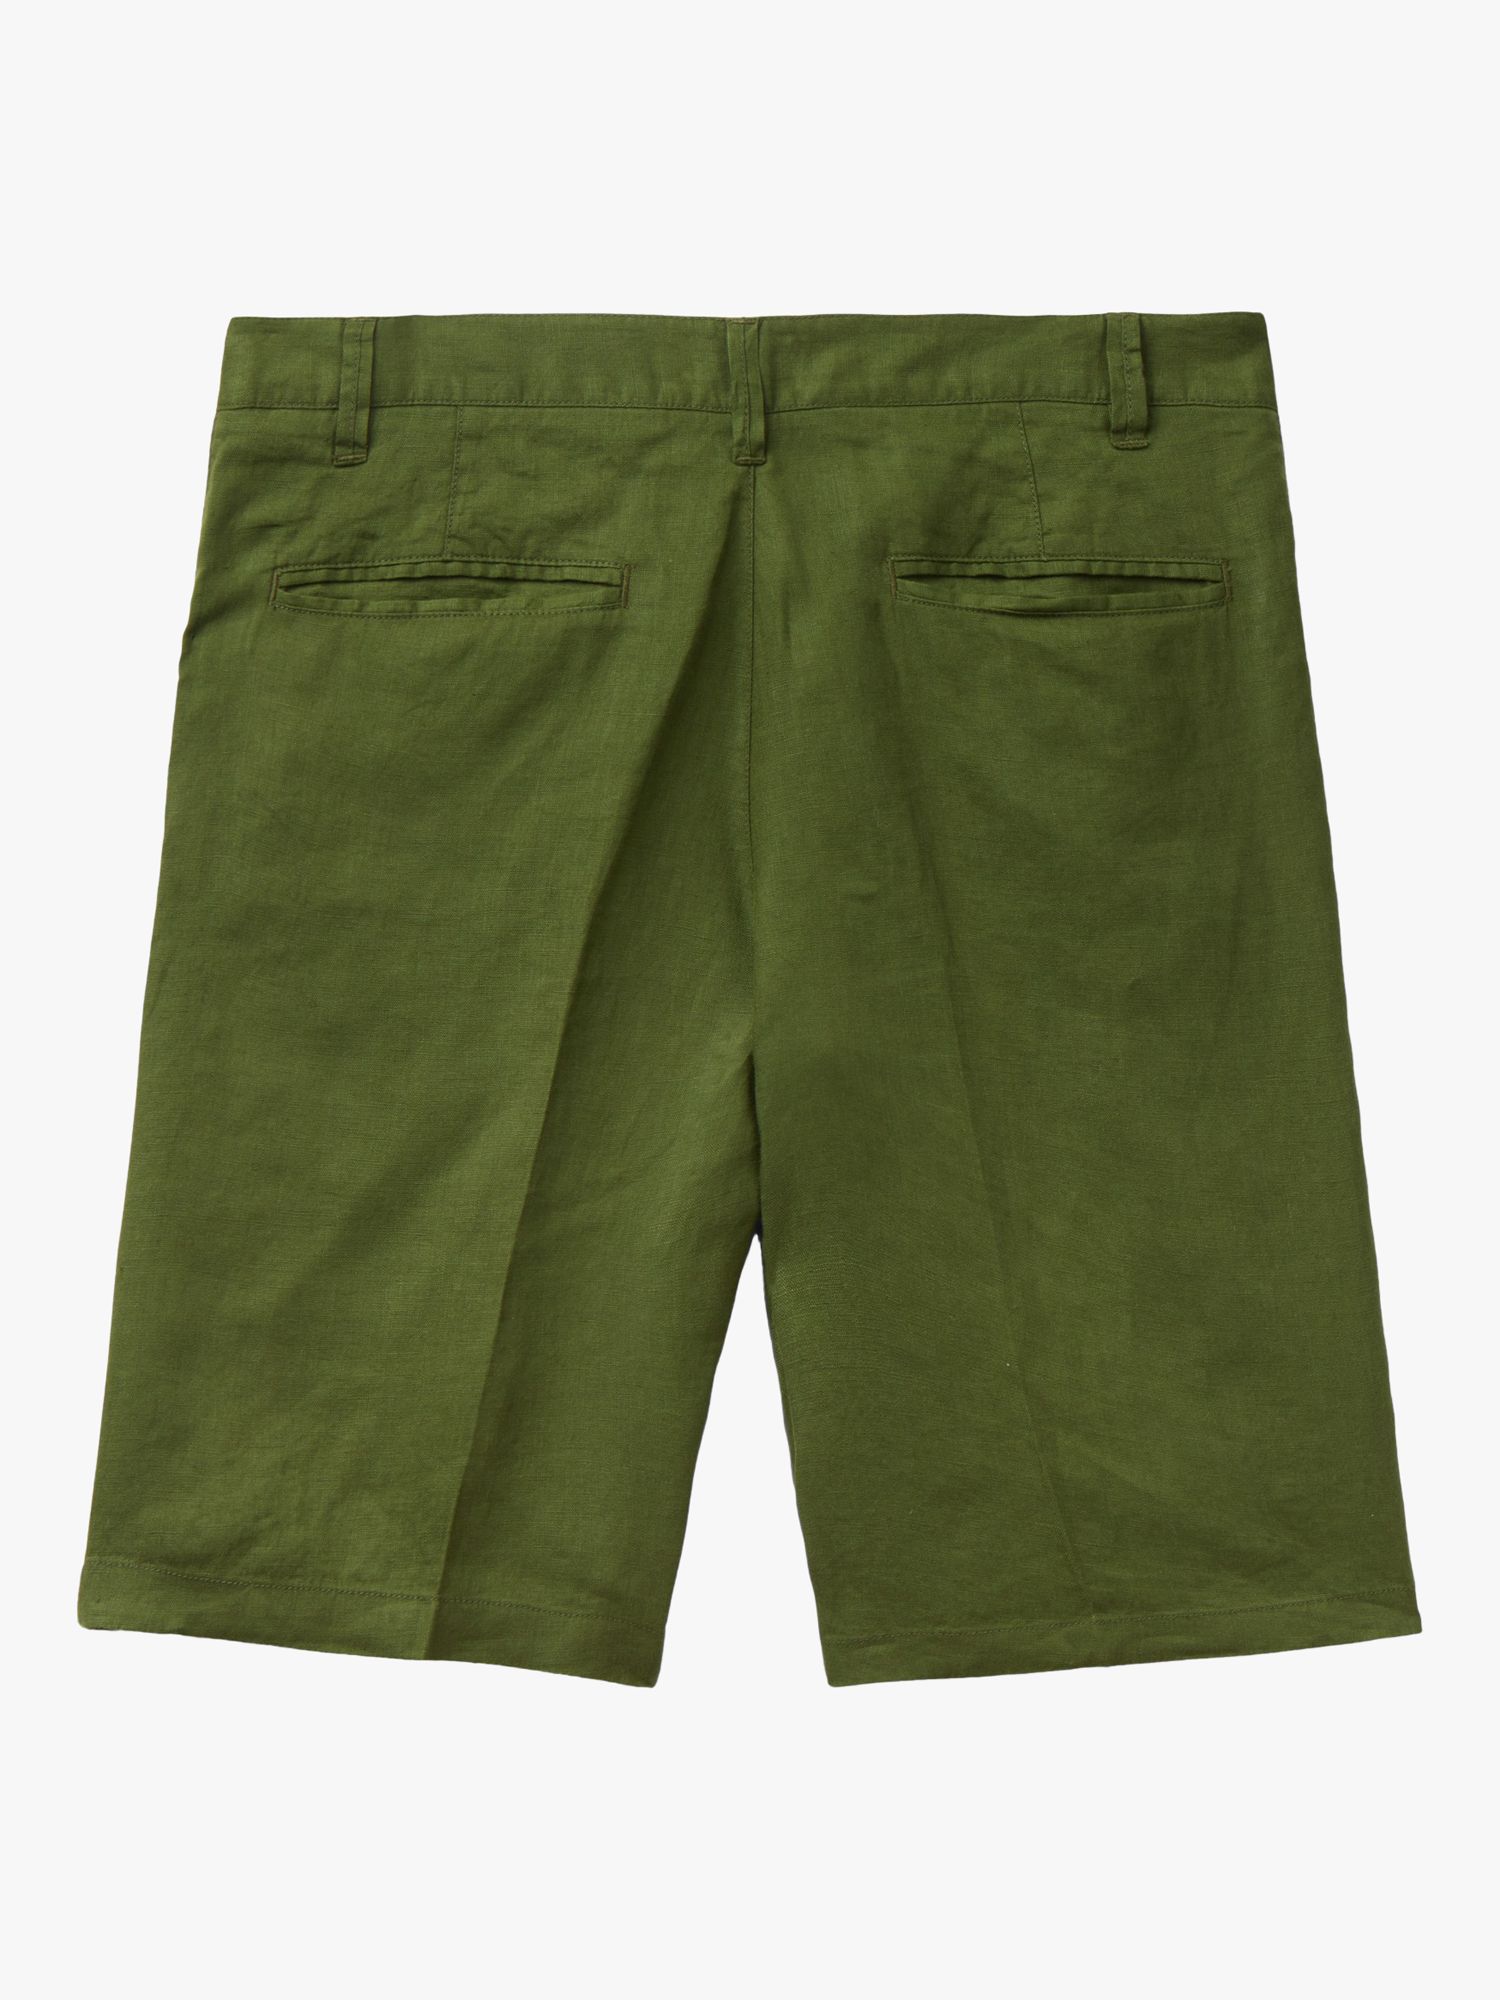 Benetton Linen Shorts, Olive Green, 30R